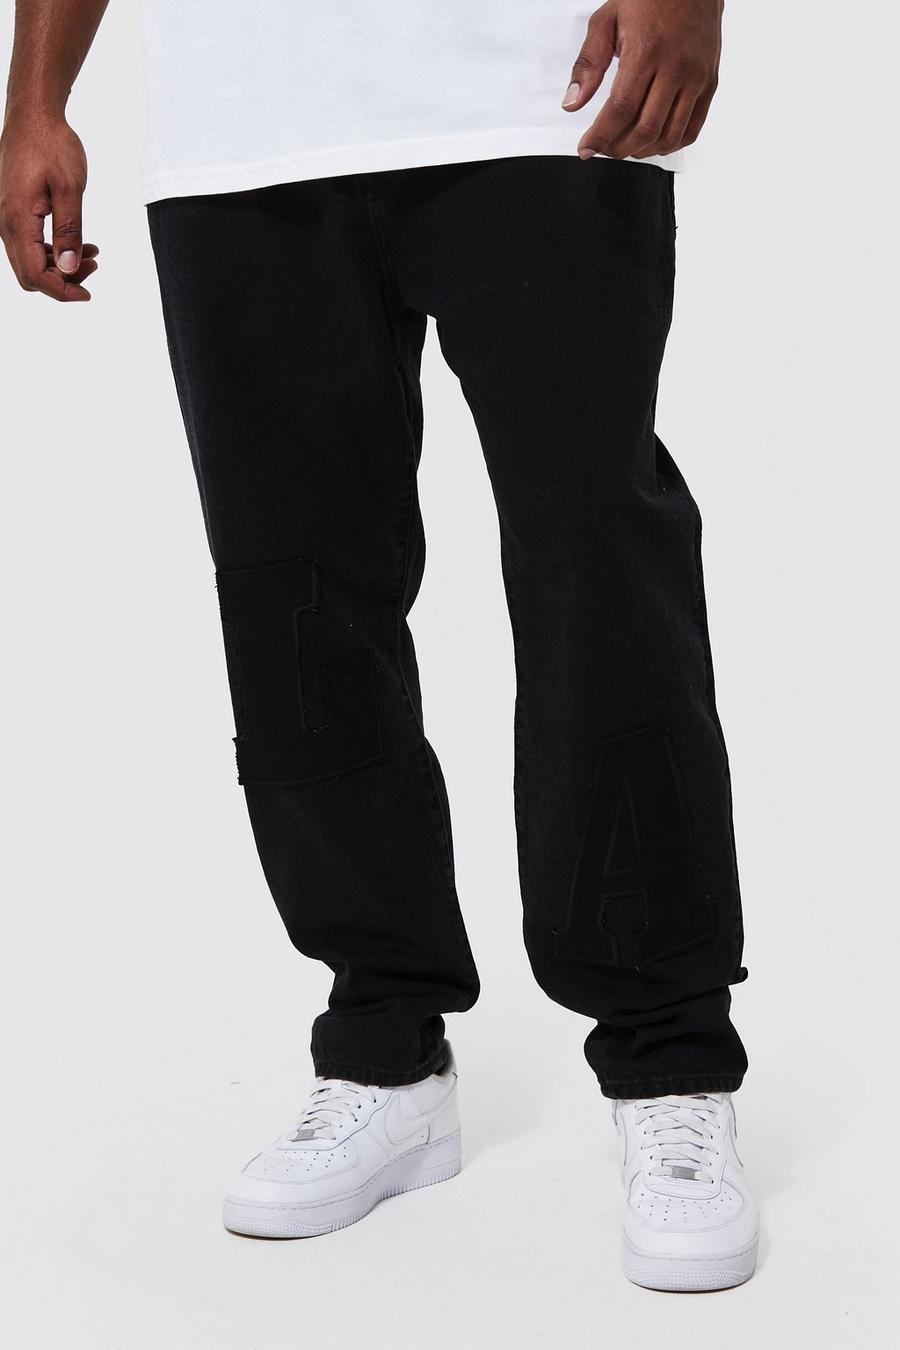 Washed black ג'ינס מבד קשיח בגזרה צרה עם אפליקציית LA בסגנון נבחרת ספורט, מידות גדולות